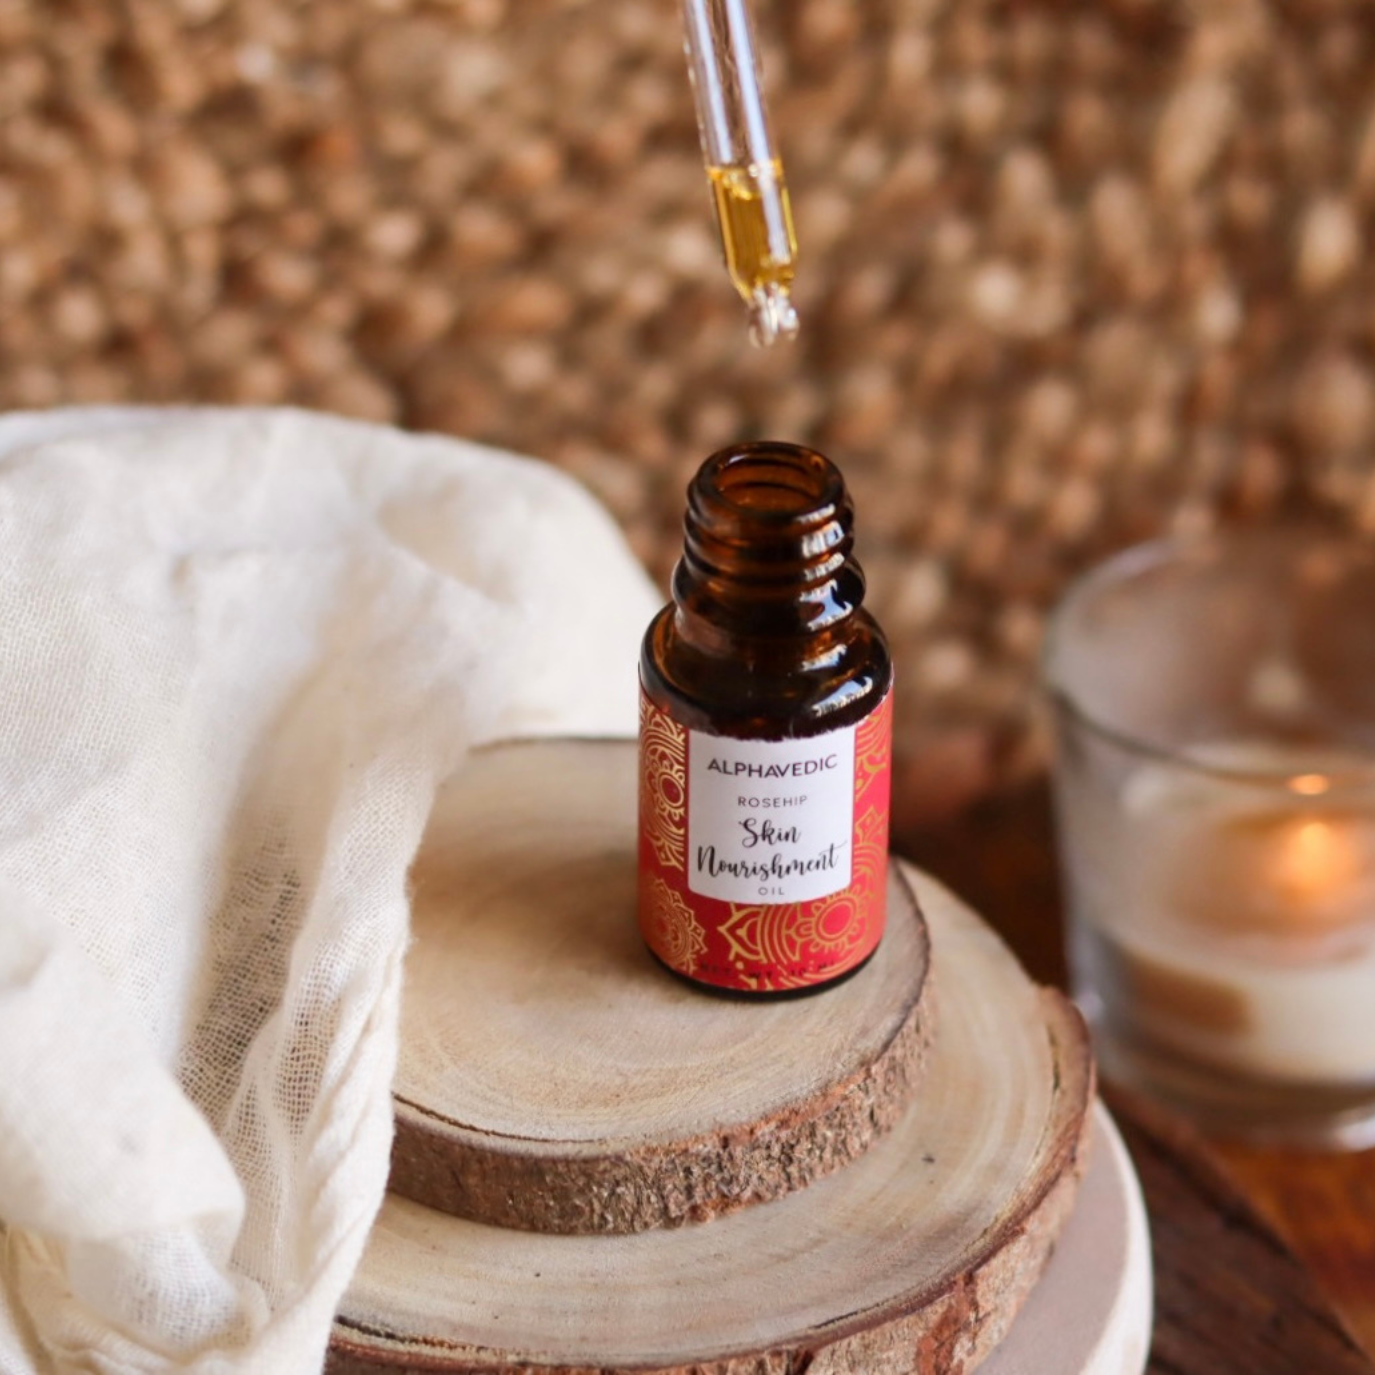 Alpahvedic Rosehip Skin Nourishment Oil (10ml)